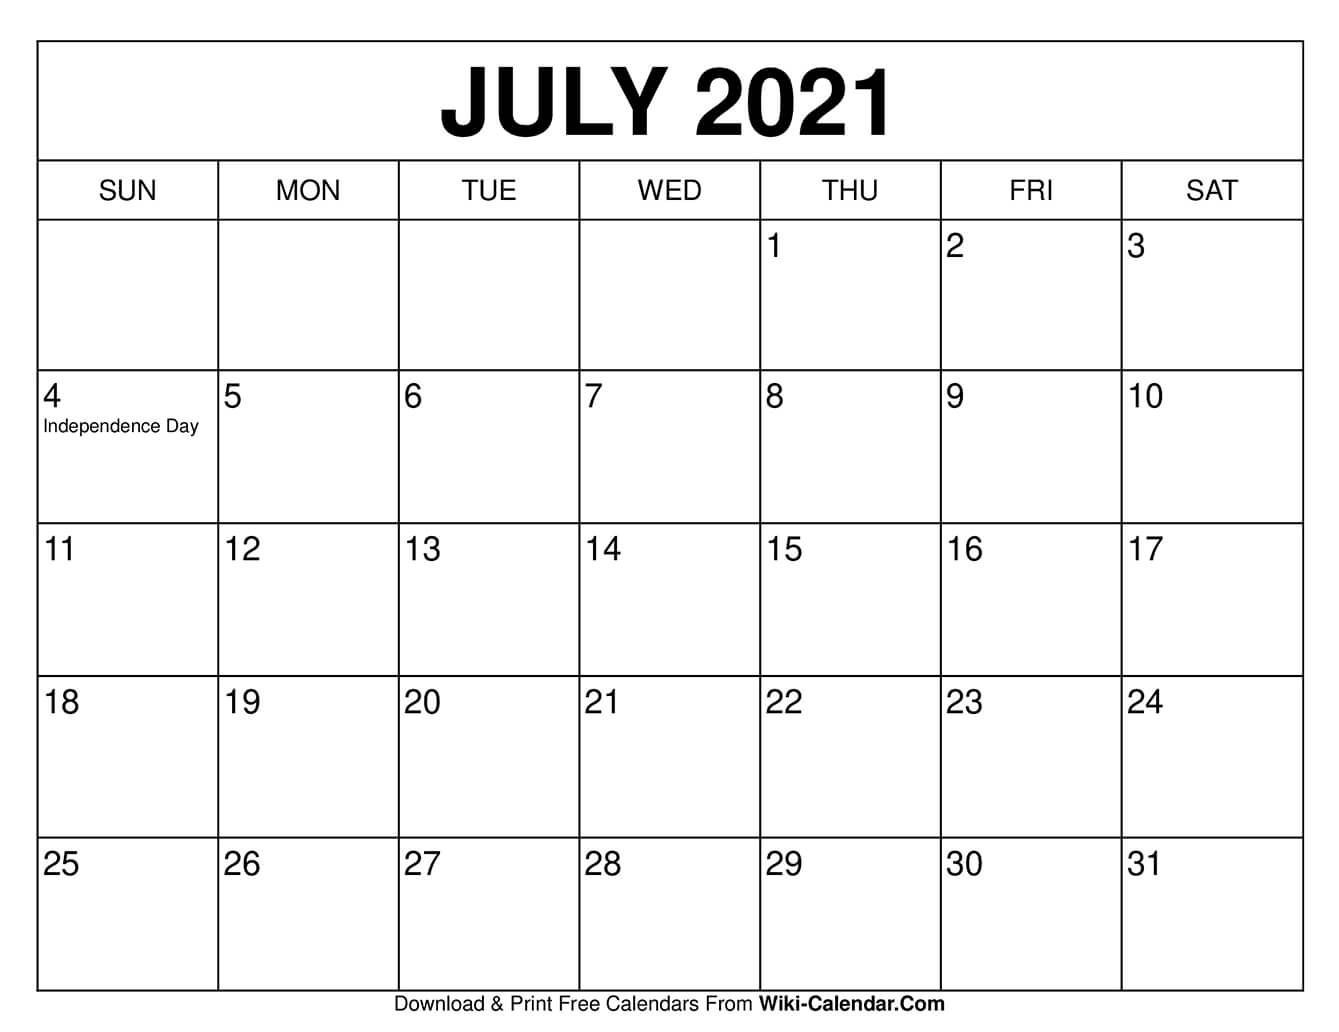 July 2021 Calendar | Free Calendars To Print, Calendar-June July 2021 Calendar Printable